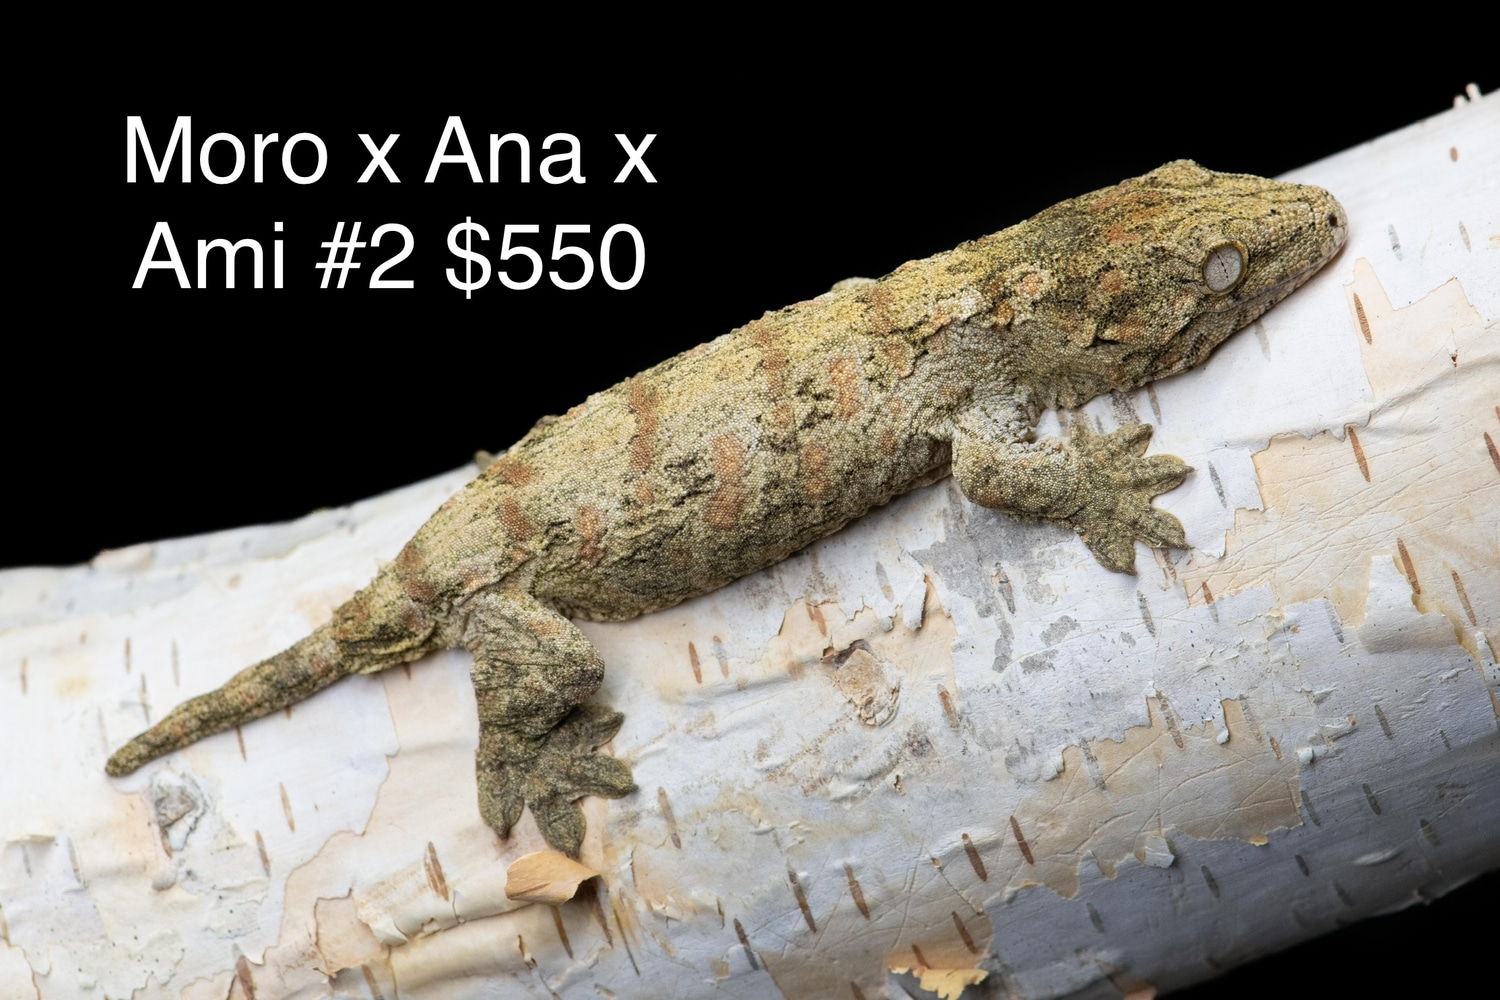 Moro X Ana X Ami #2 Leachianus Gecko by Reptzilla